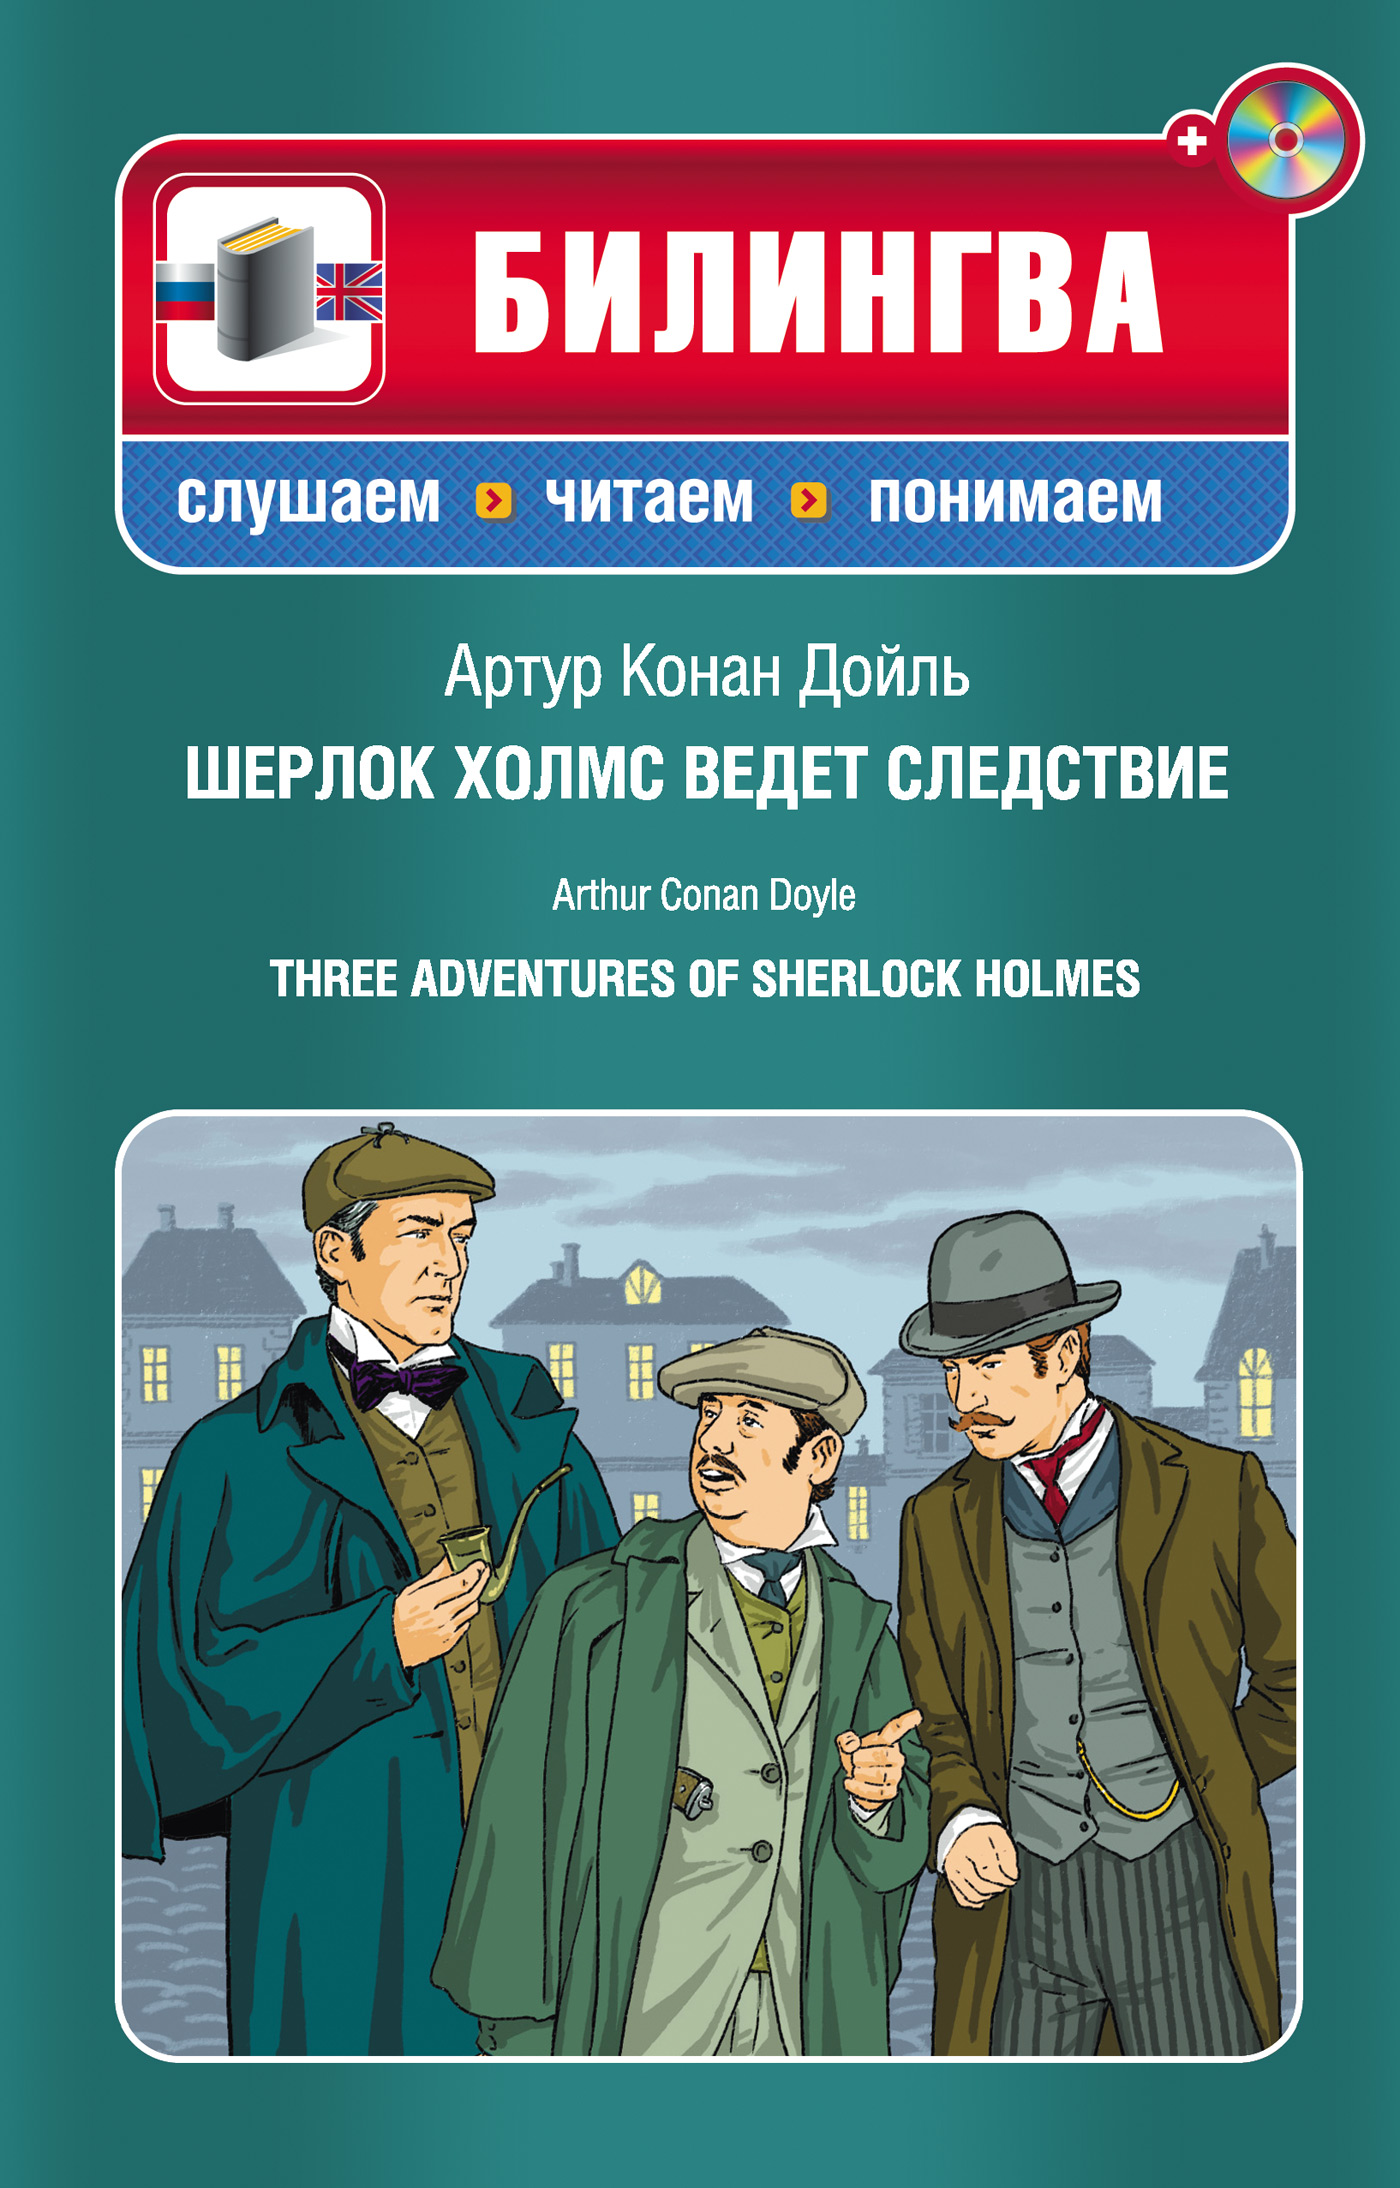 Артур Конан Дойл - «Шерлок Холмс ведет следствие / Three Adventures of Sherlock Holmes (+MP3)»